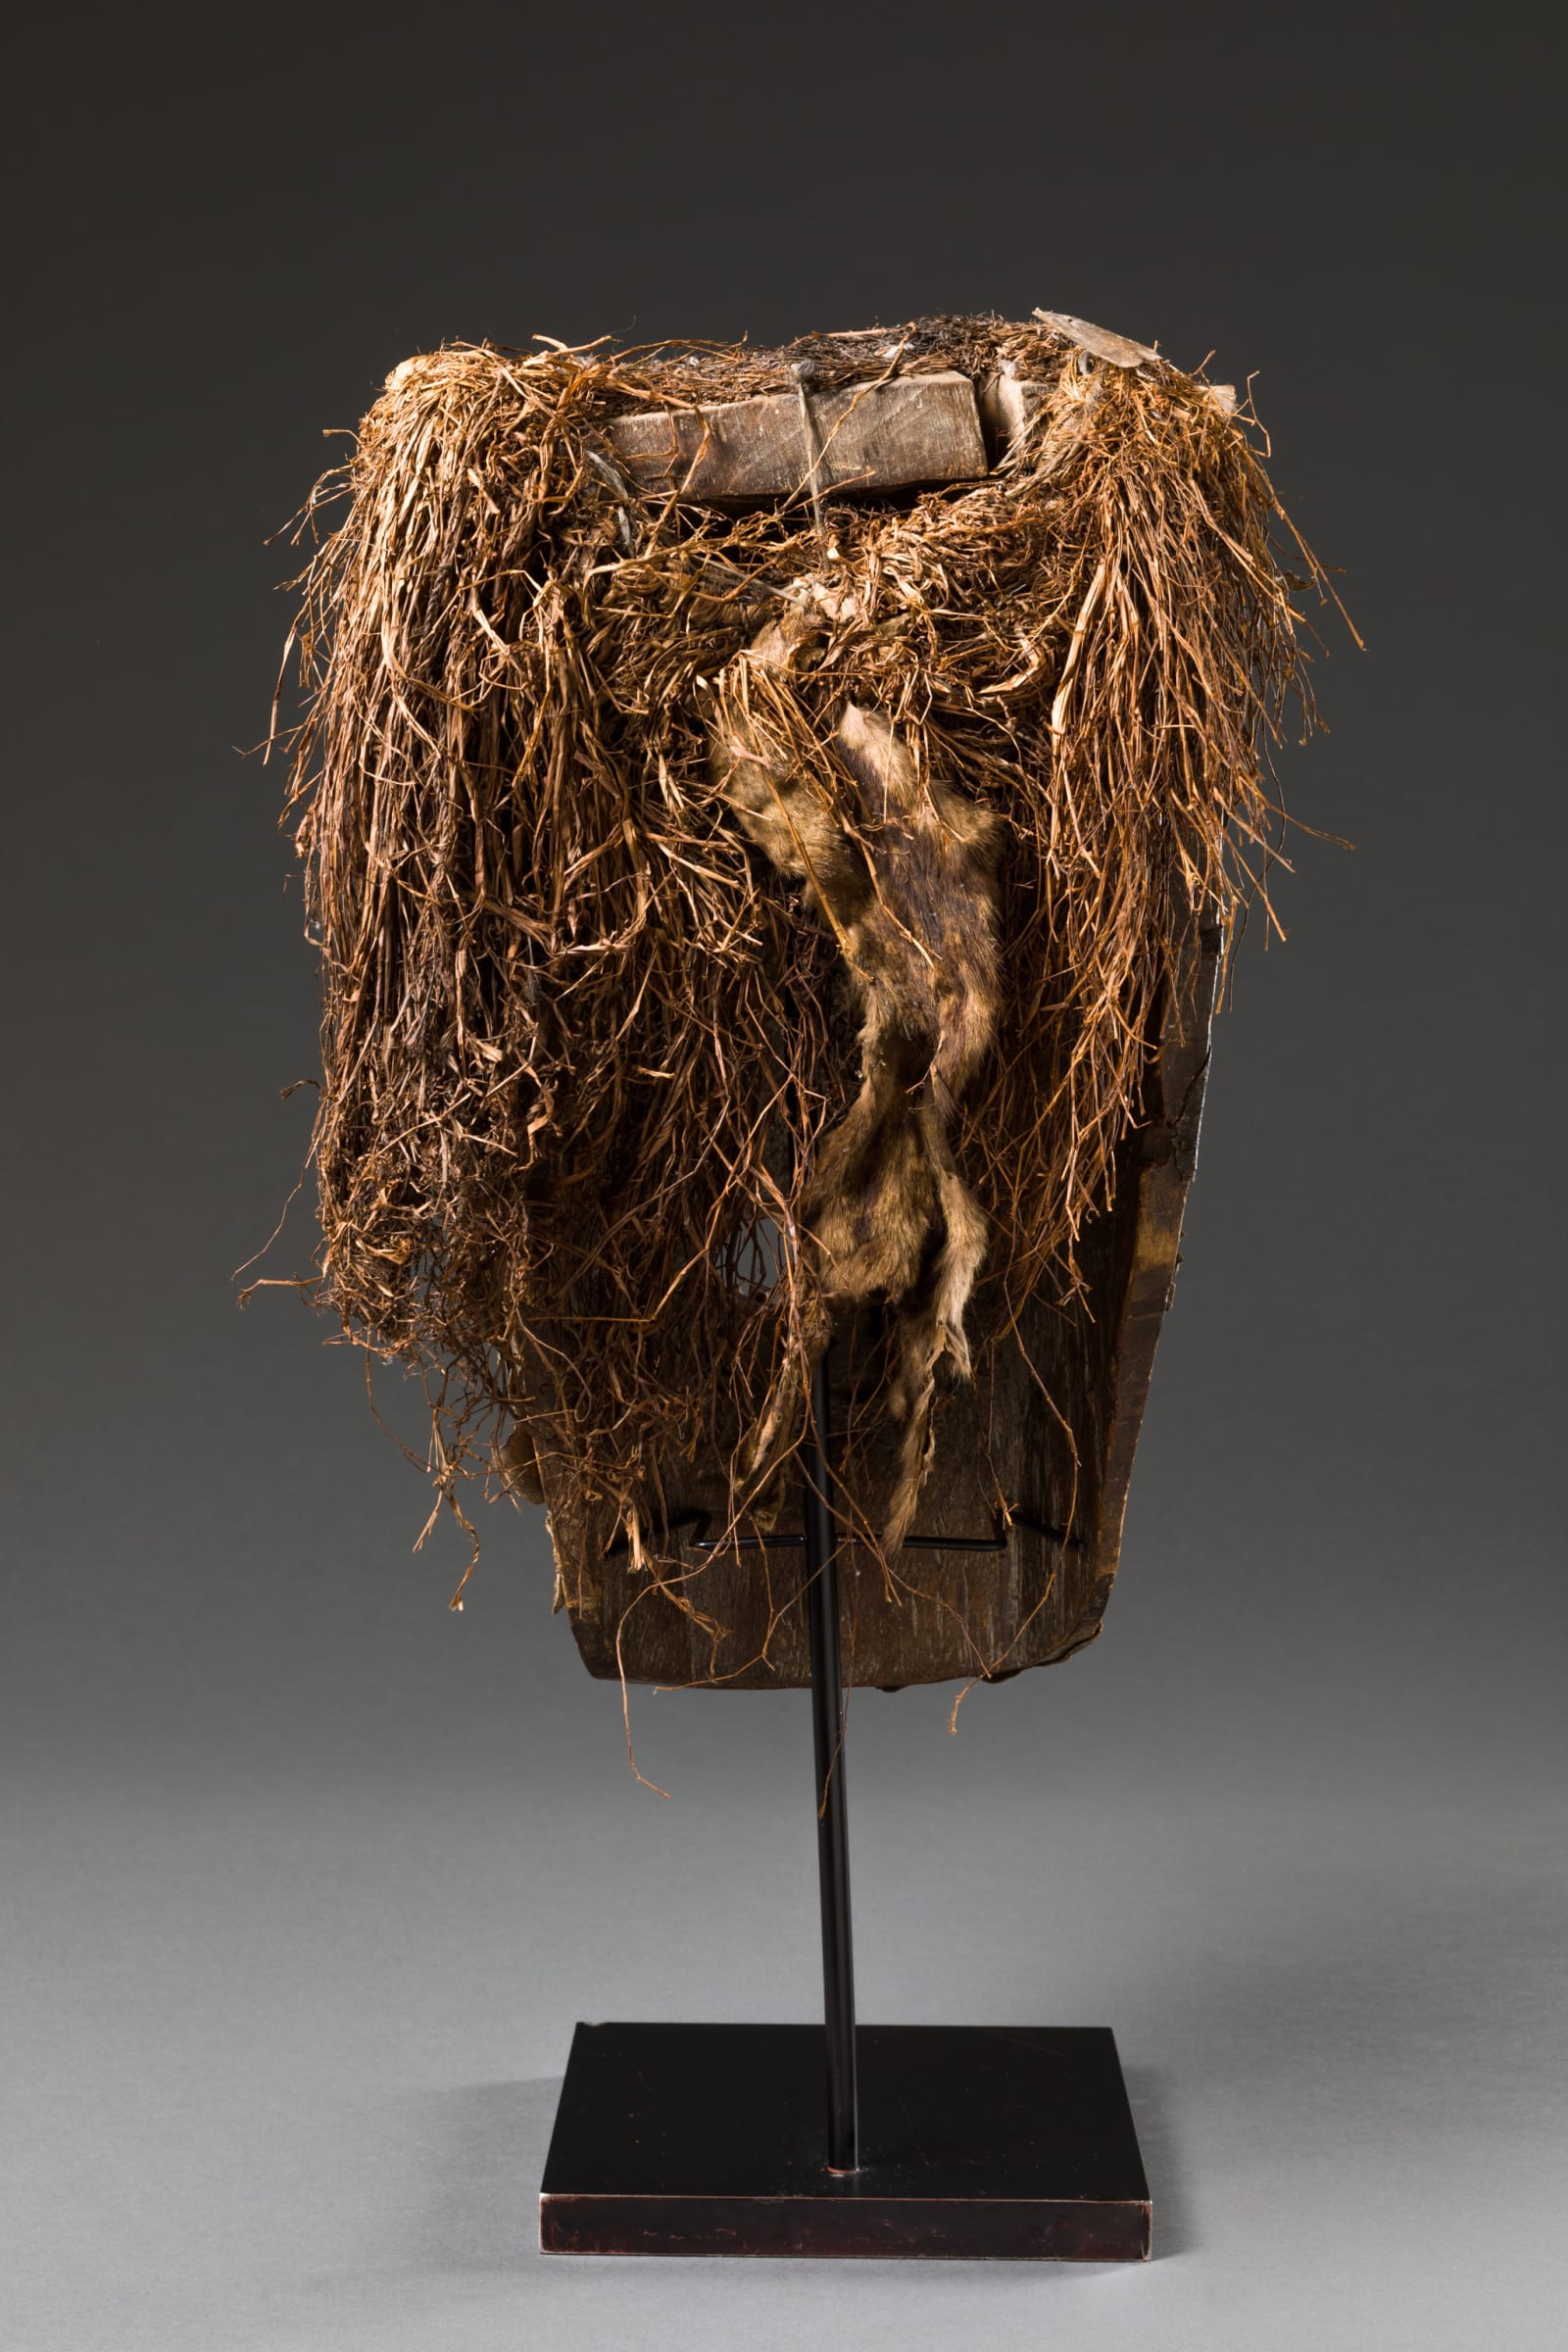 Yoruba Ekoi (Ejagham): Ekoi wooden masks are covered with animal skin.  These figures usually refer